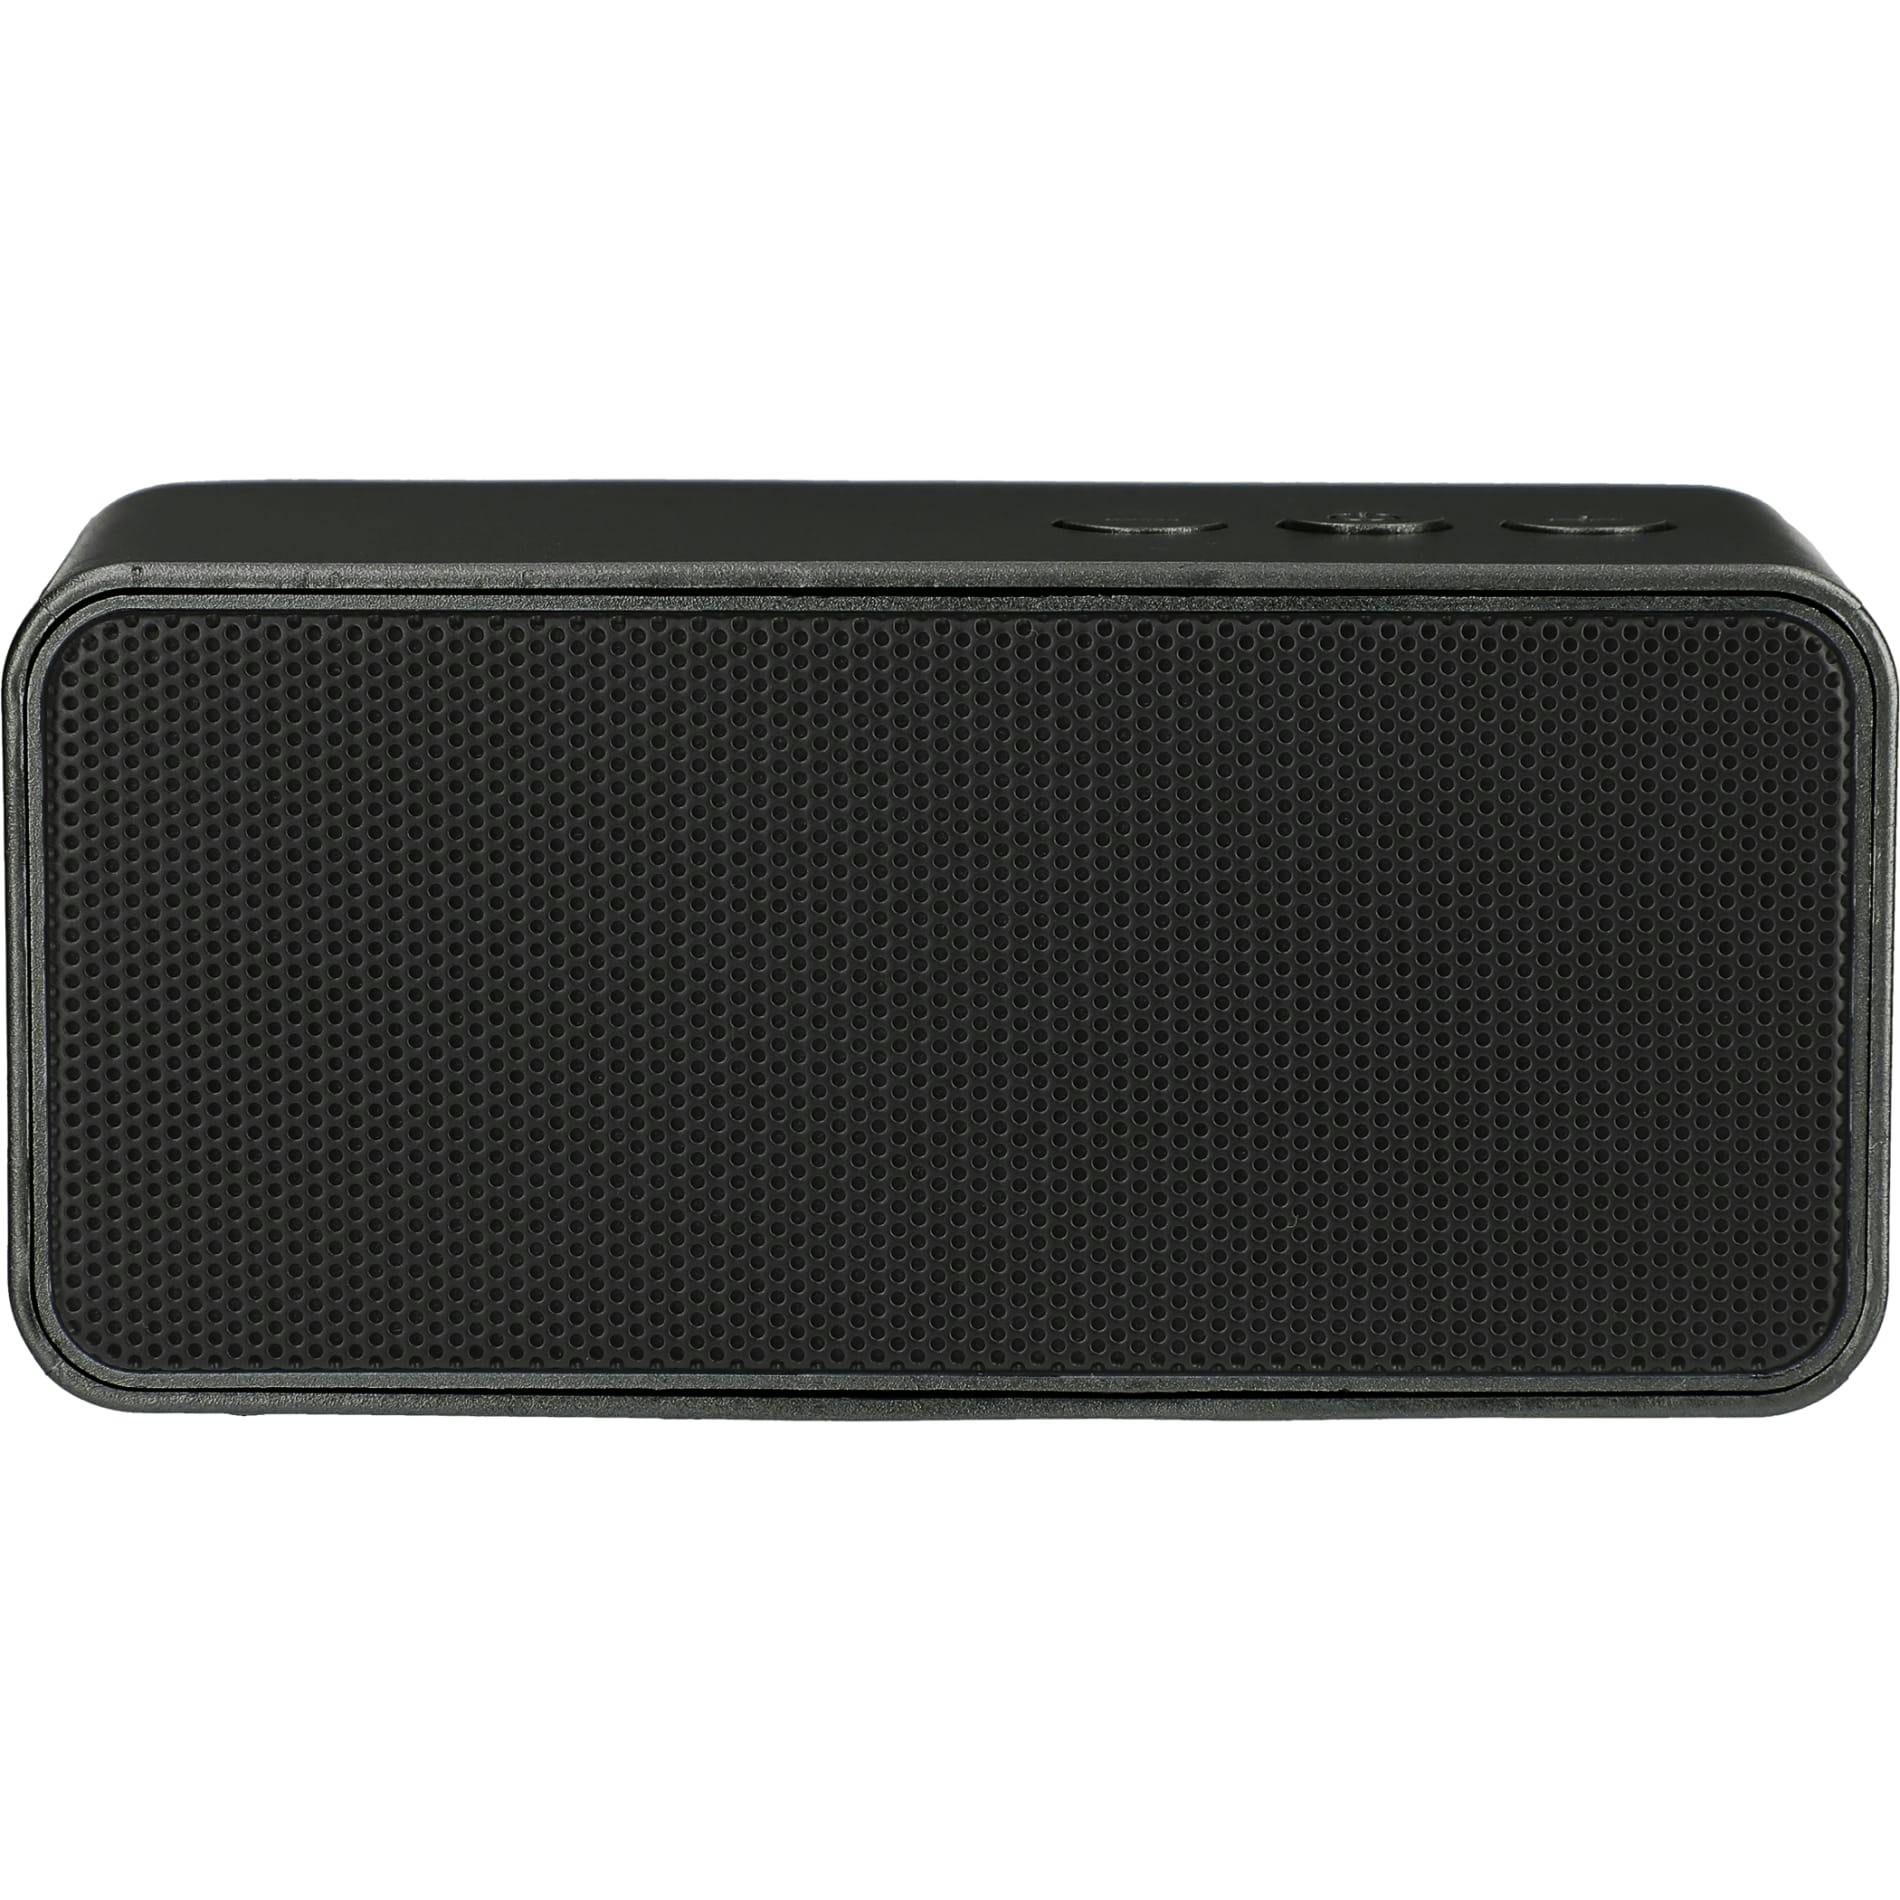 Stark Bluetooth Speaker - additional Image 2